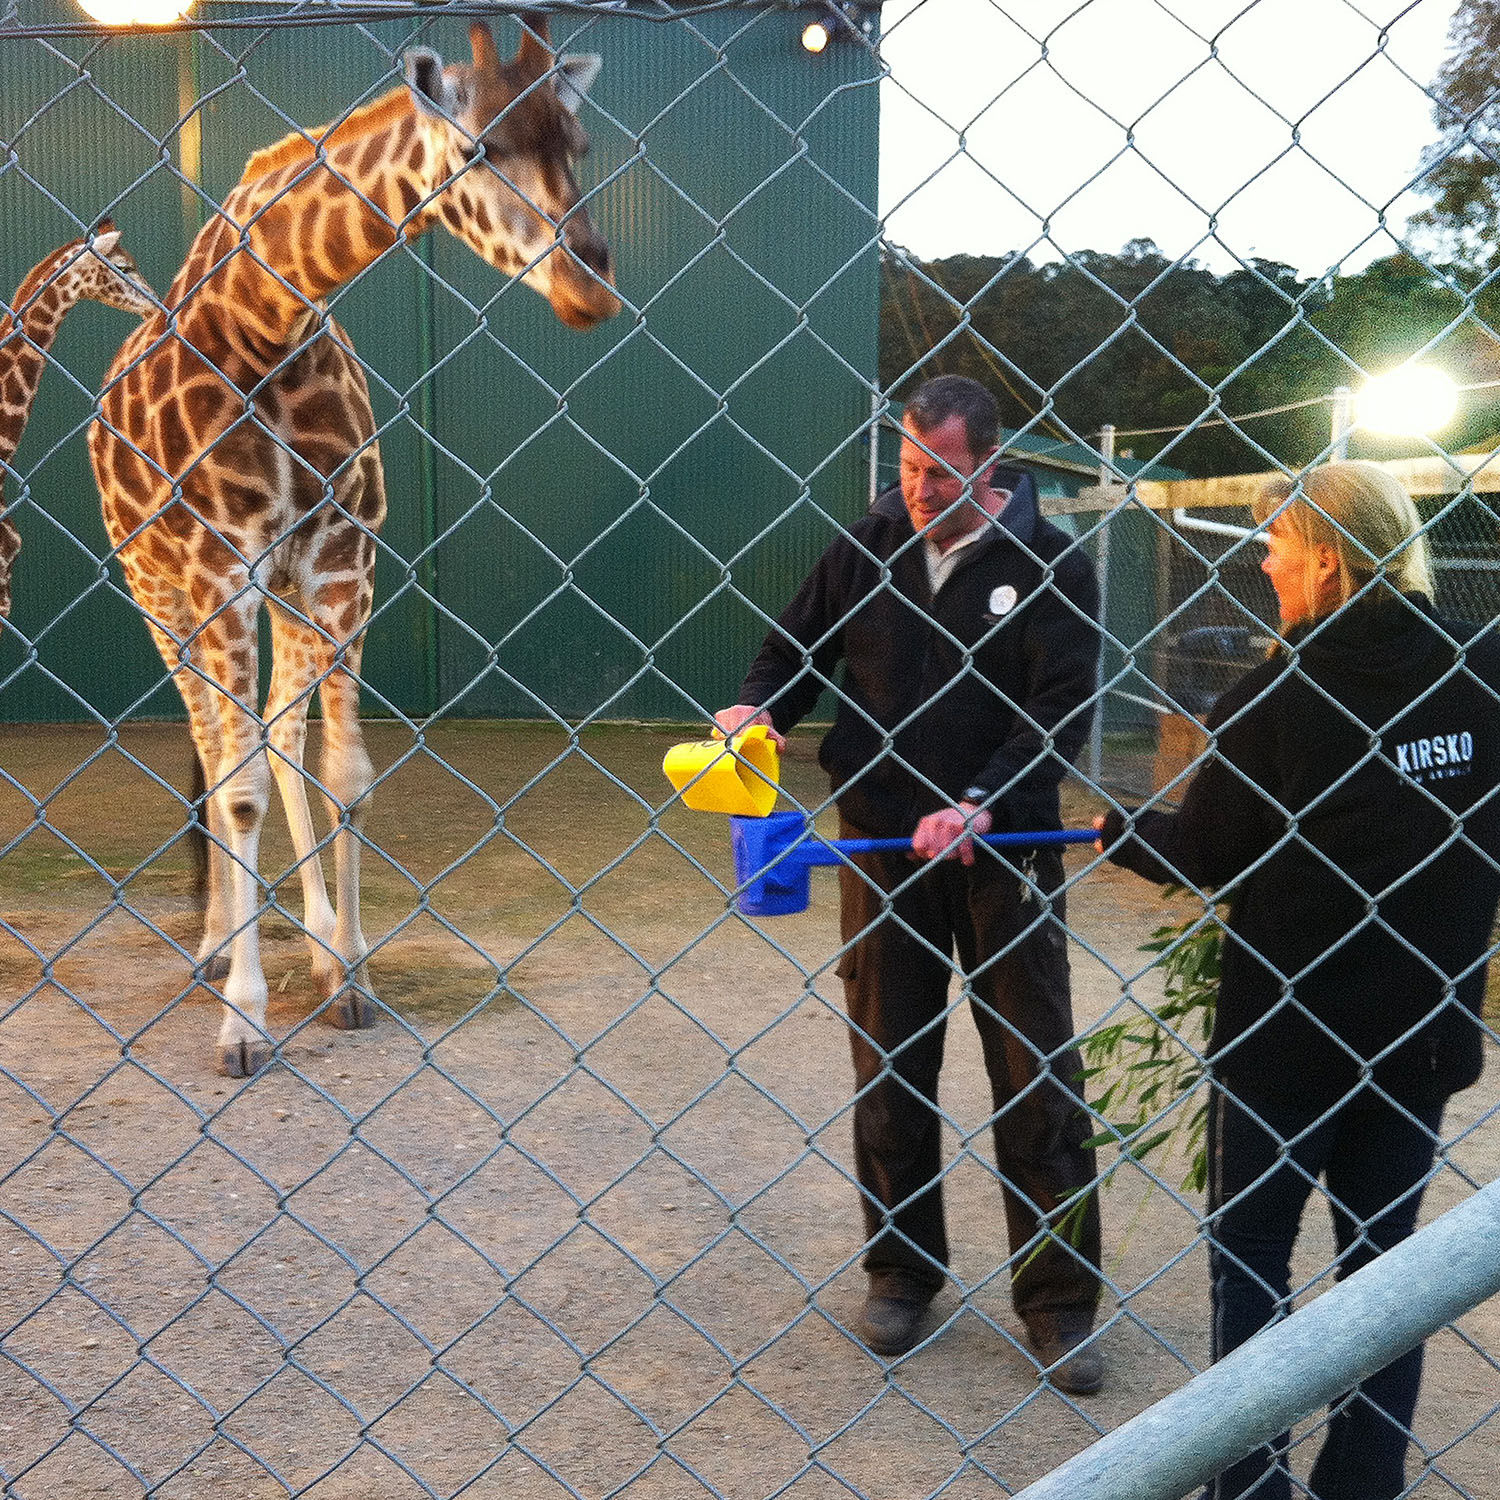 Kirsko Film Animals Training with Giraffe 1500x1500px.jpg